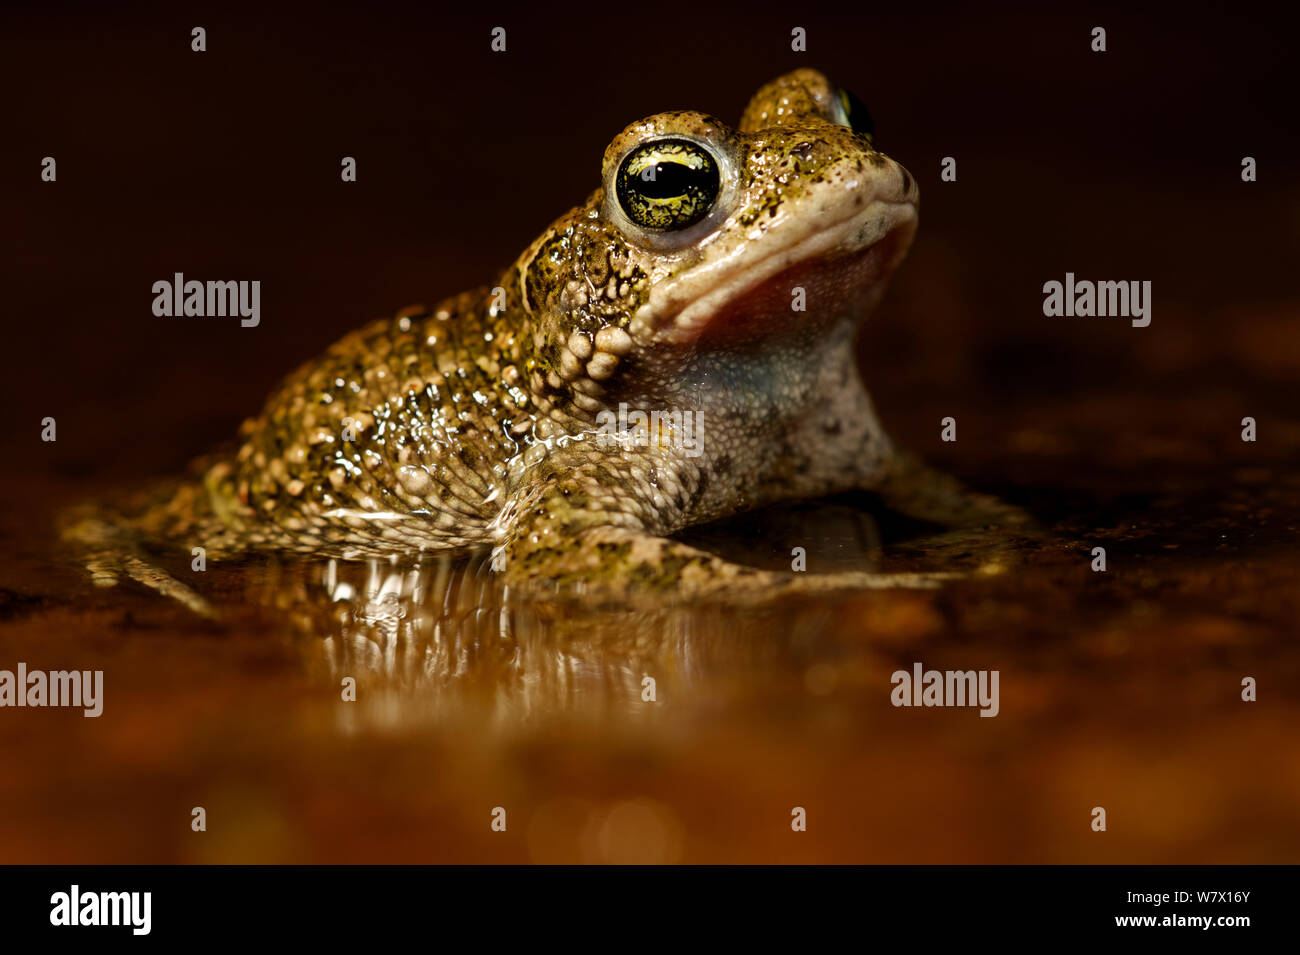 Natterjack toad (Epidalea / Bufo calamita) in shallow water with reflection. Belgium, April. Stock Photo